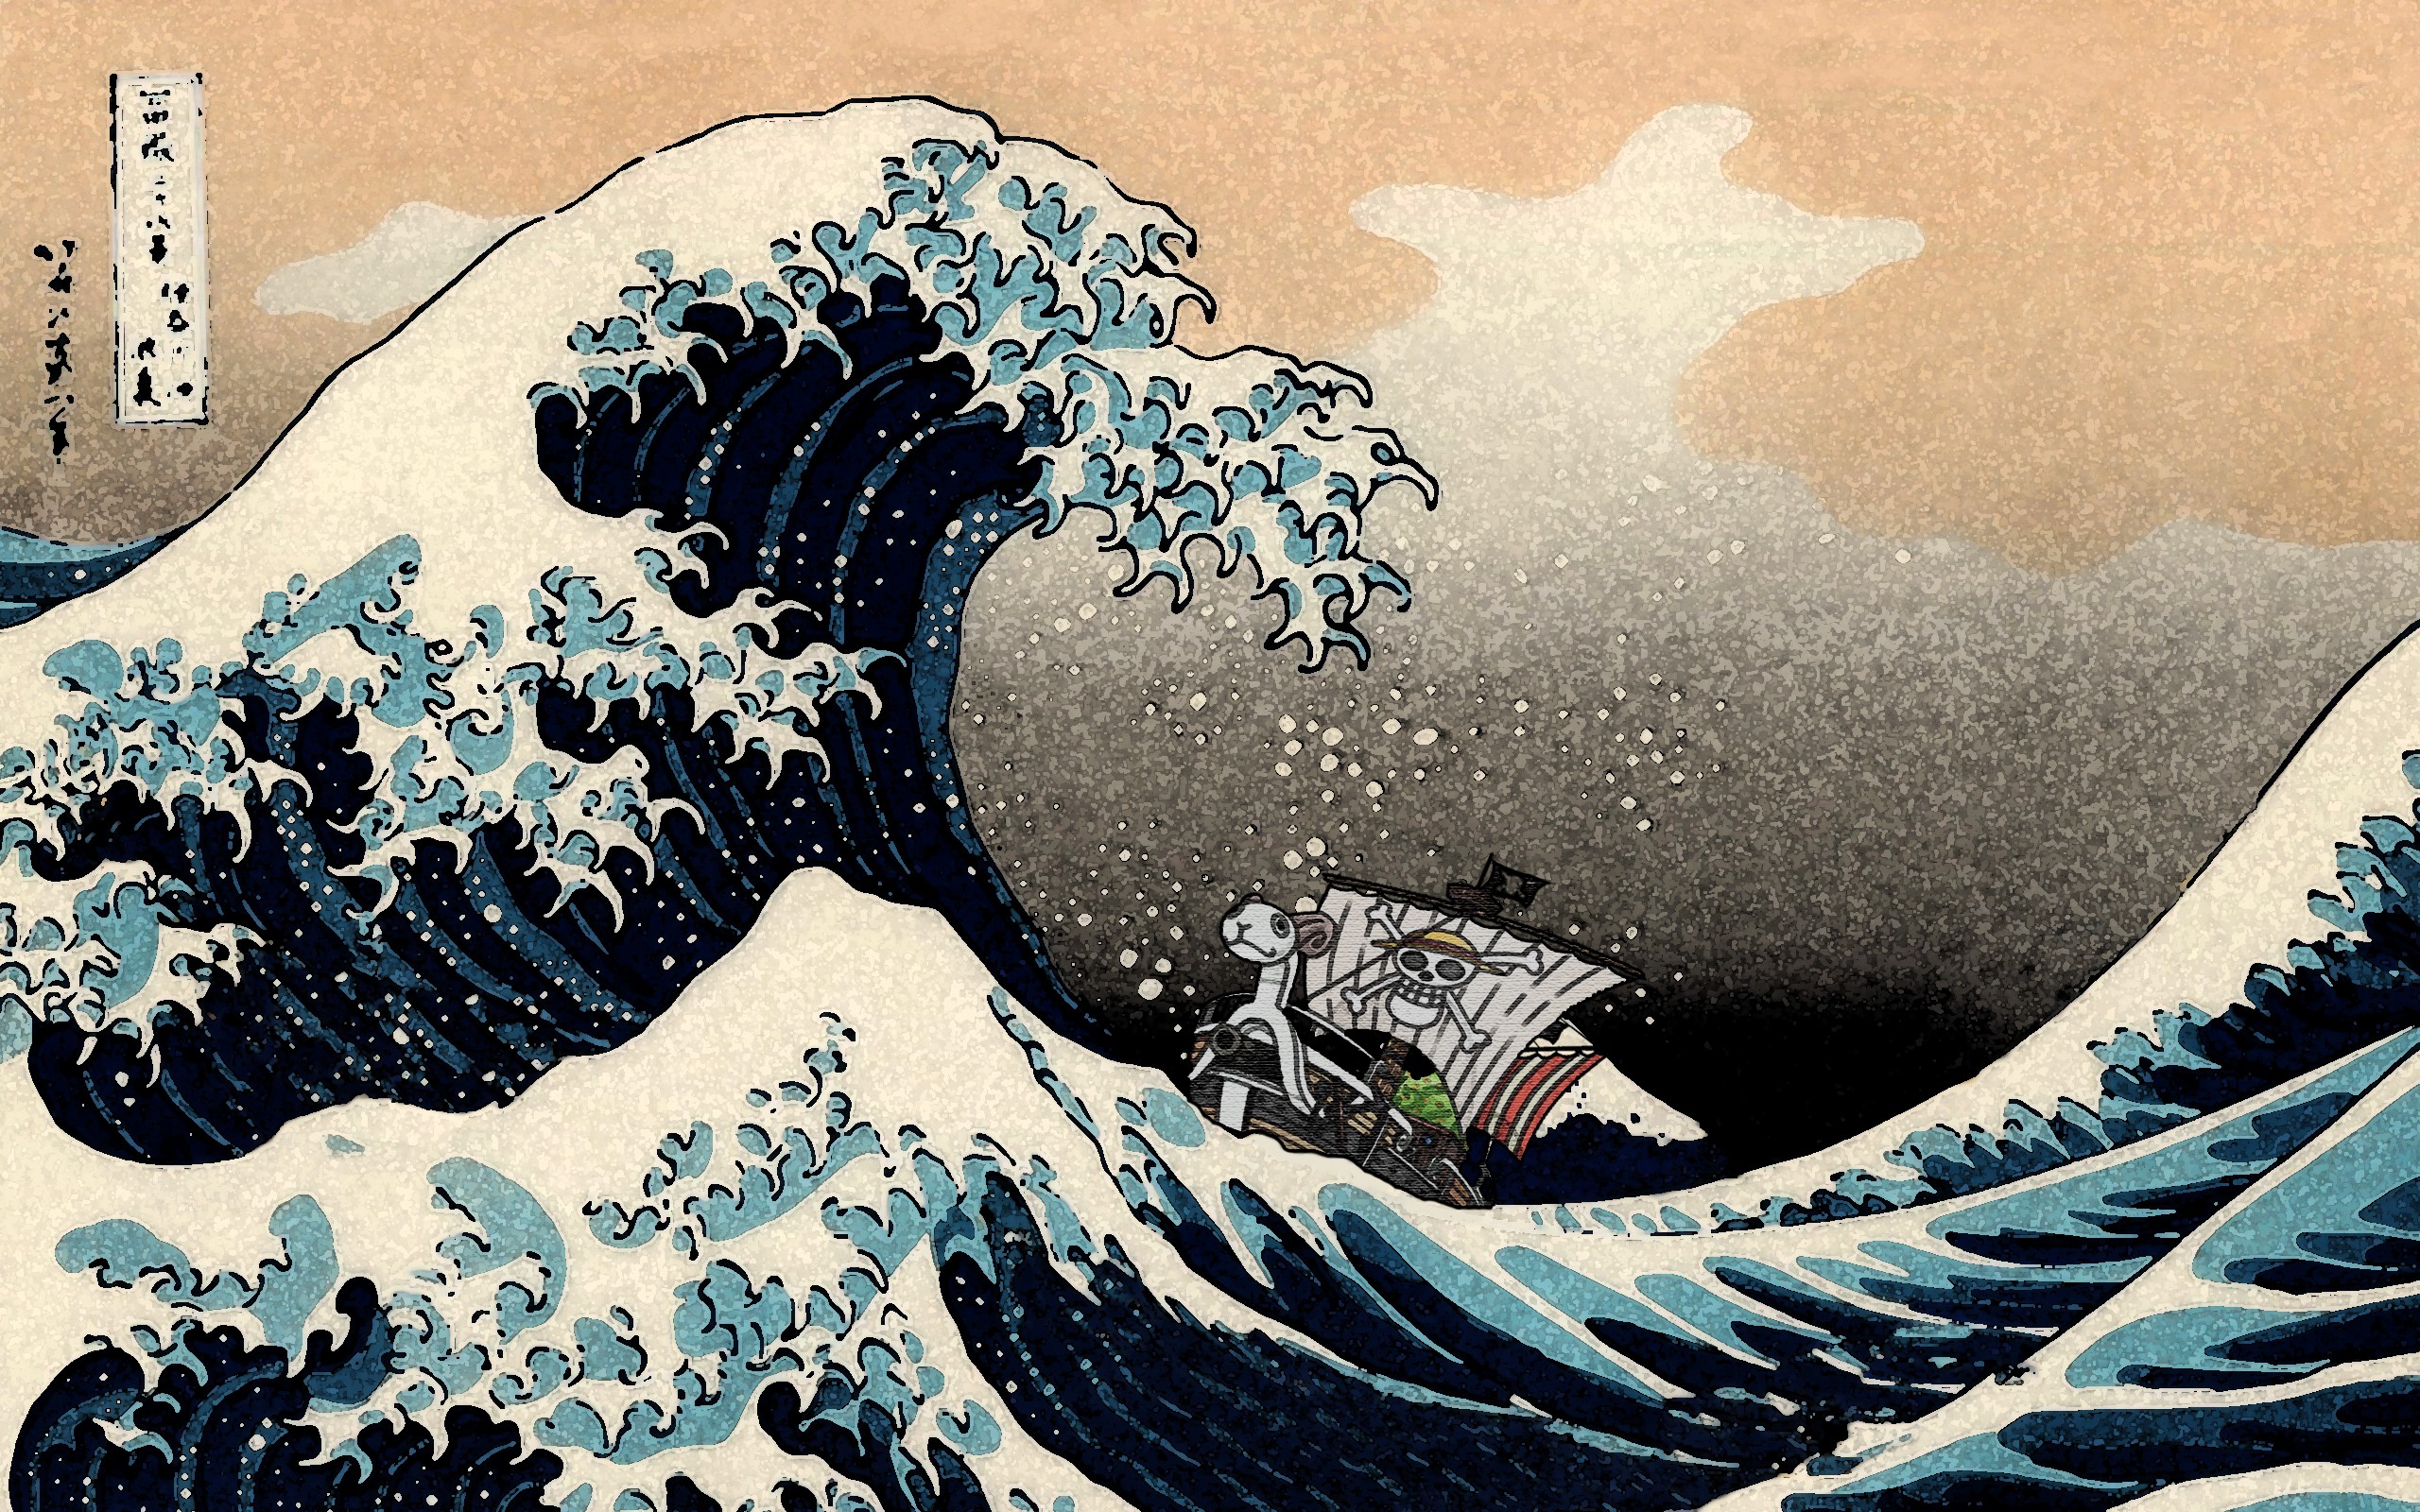 General 2560x1600 The Great Wave of Kanagawa Asian artwork waves ship Ukiyo-e One Piece